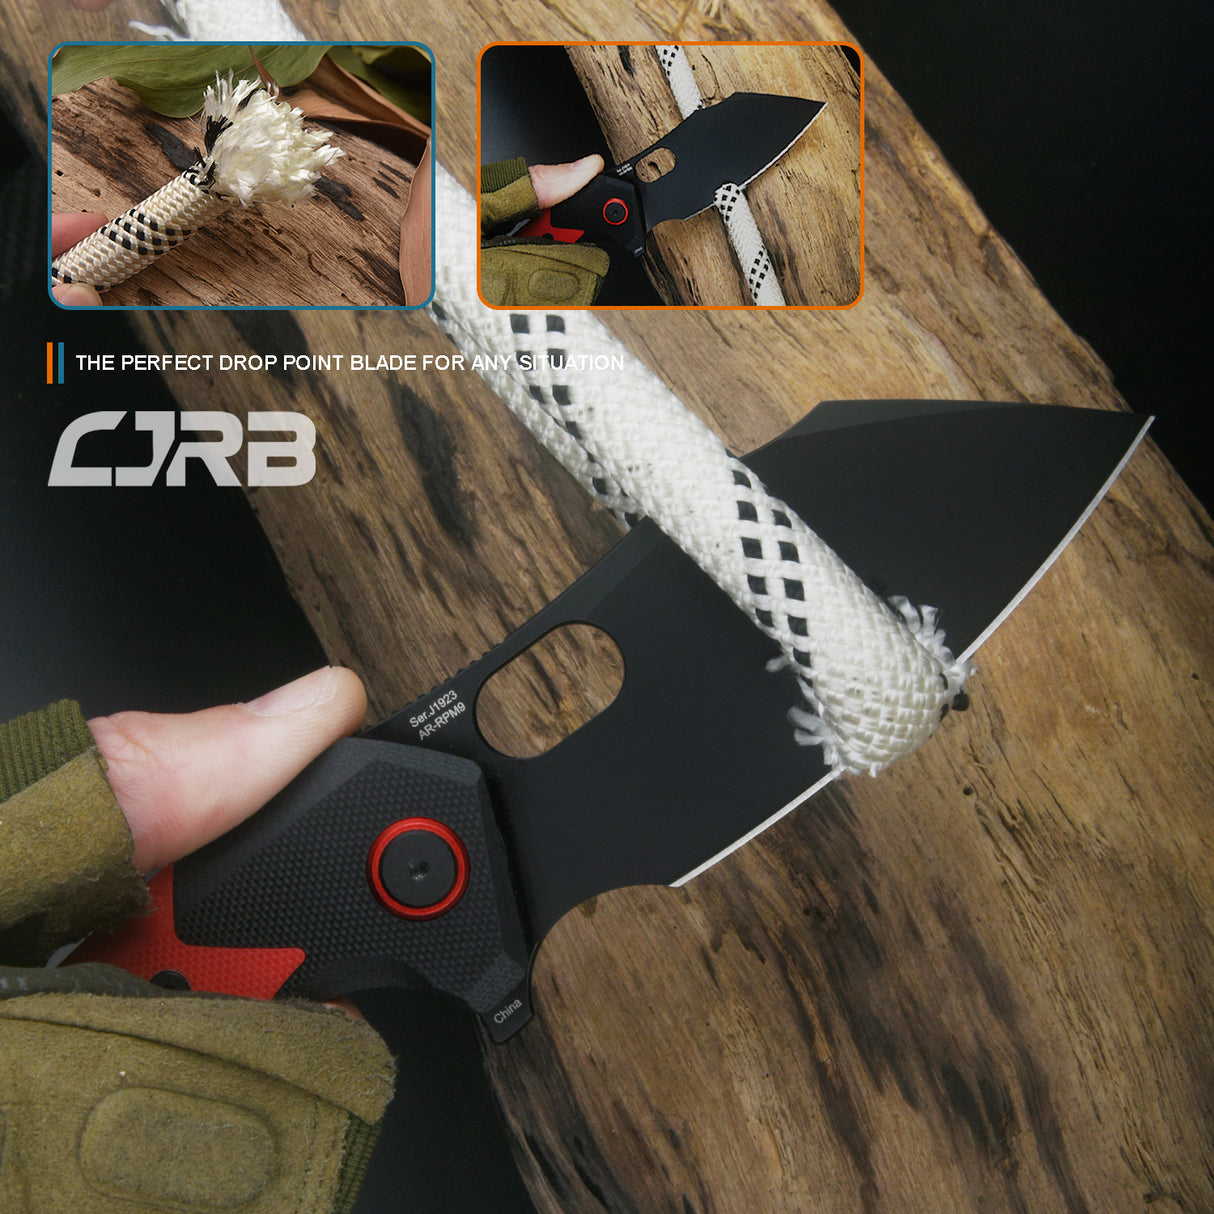 CJRB Caldera J1923 AR-RPM9 Steel Blade G10 Handle Folding Knives